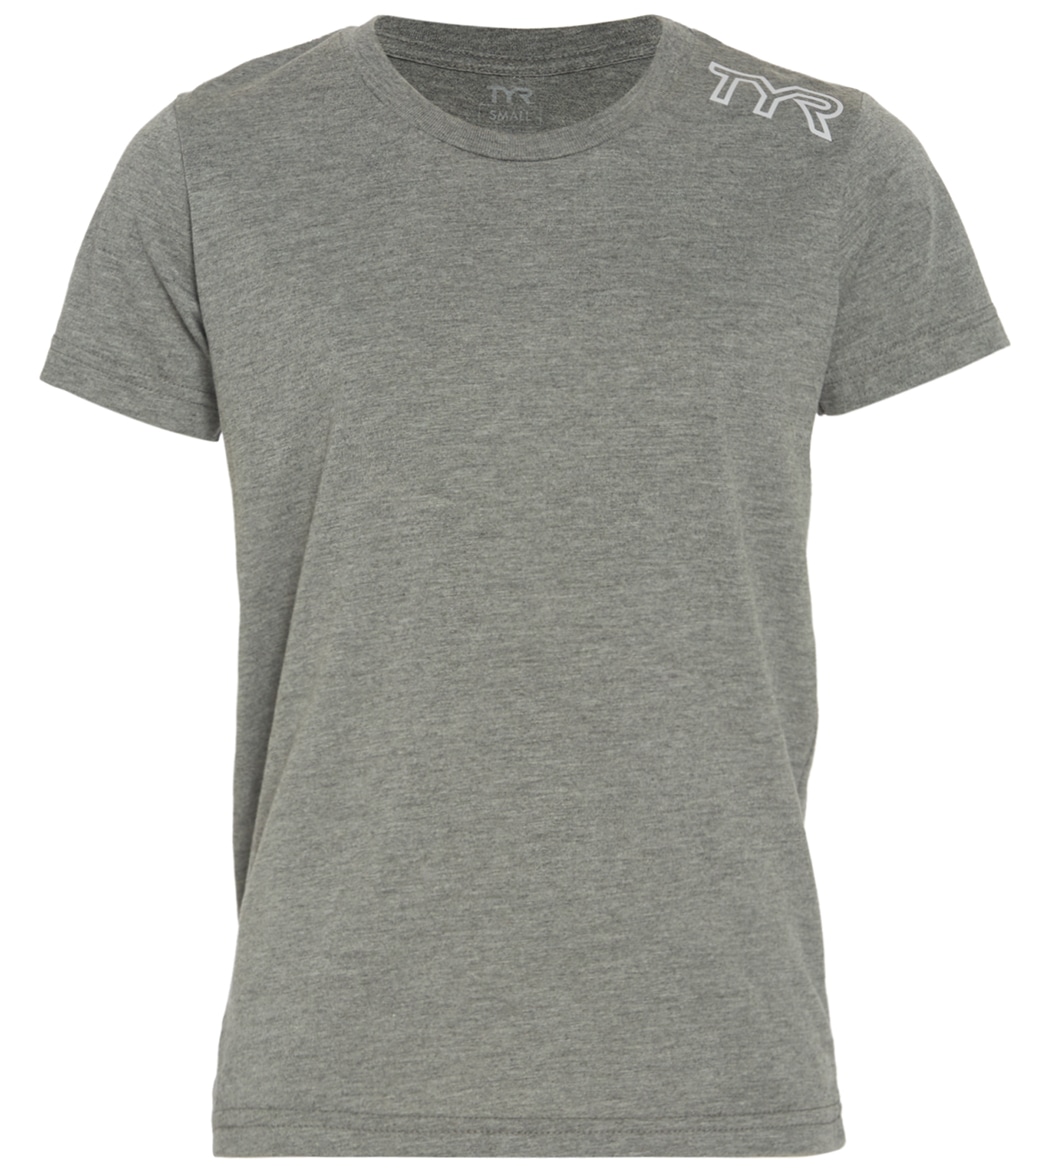 TYR Men's Youth Triblend Tee Shirt - Heather Grey Medium Cotton/Polyester - Swimoutlet.com